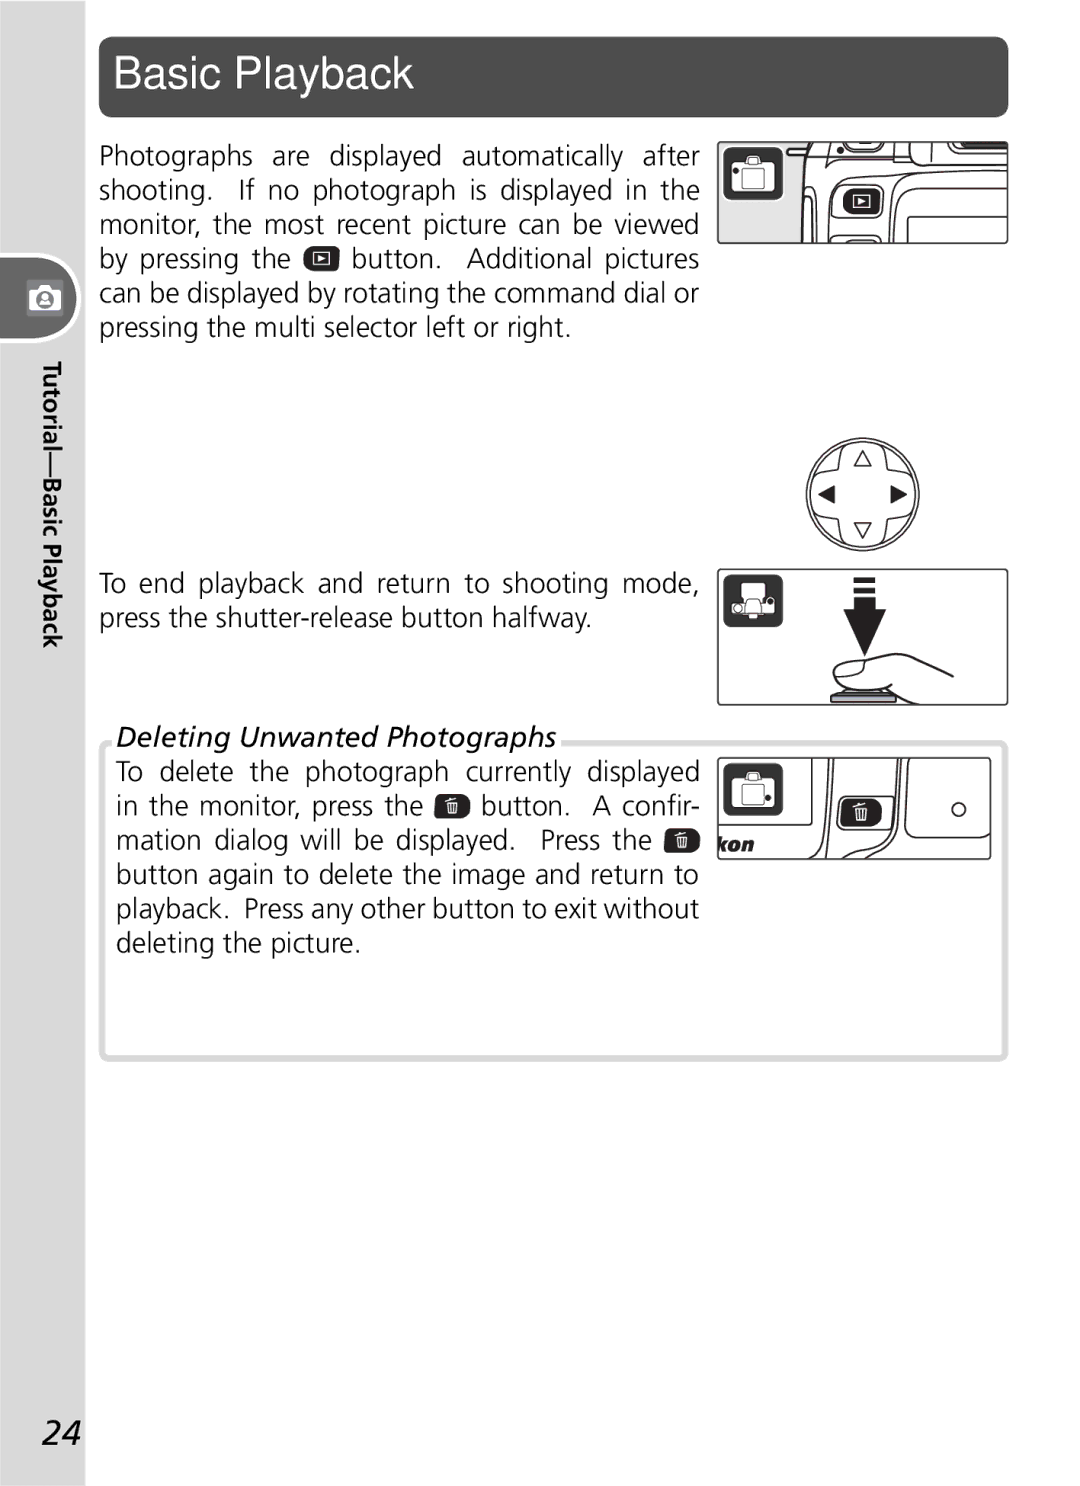 Nikon D50 manual Deleting Unwanted Photographs, Tutorial-Basic Playback 